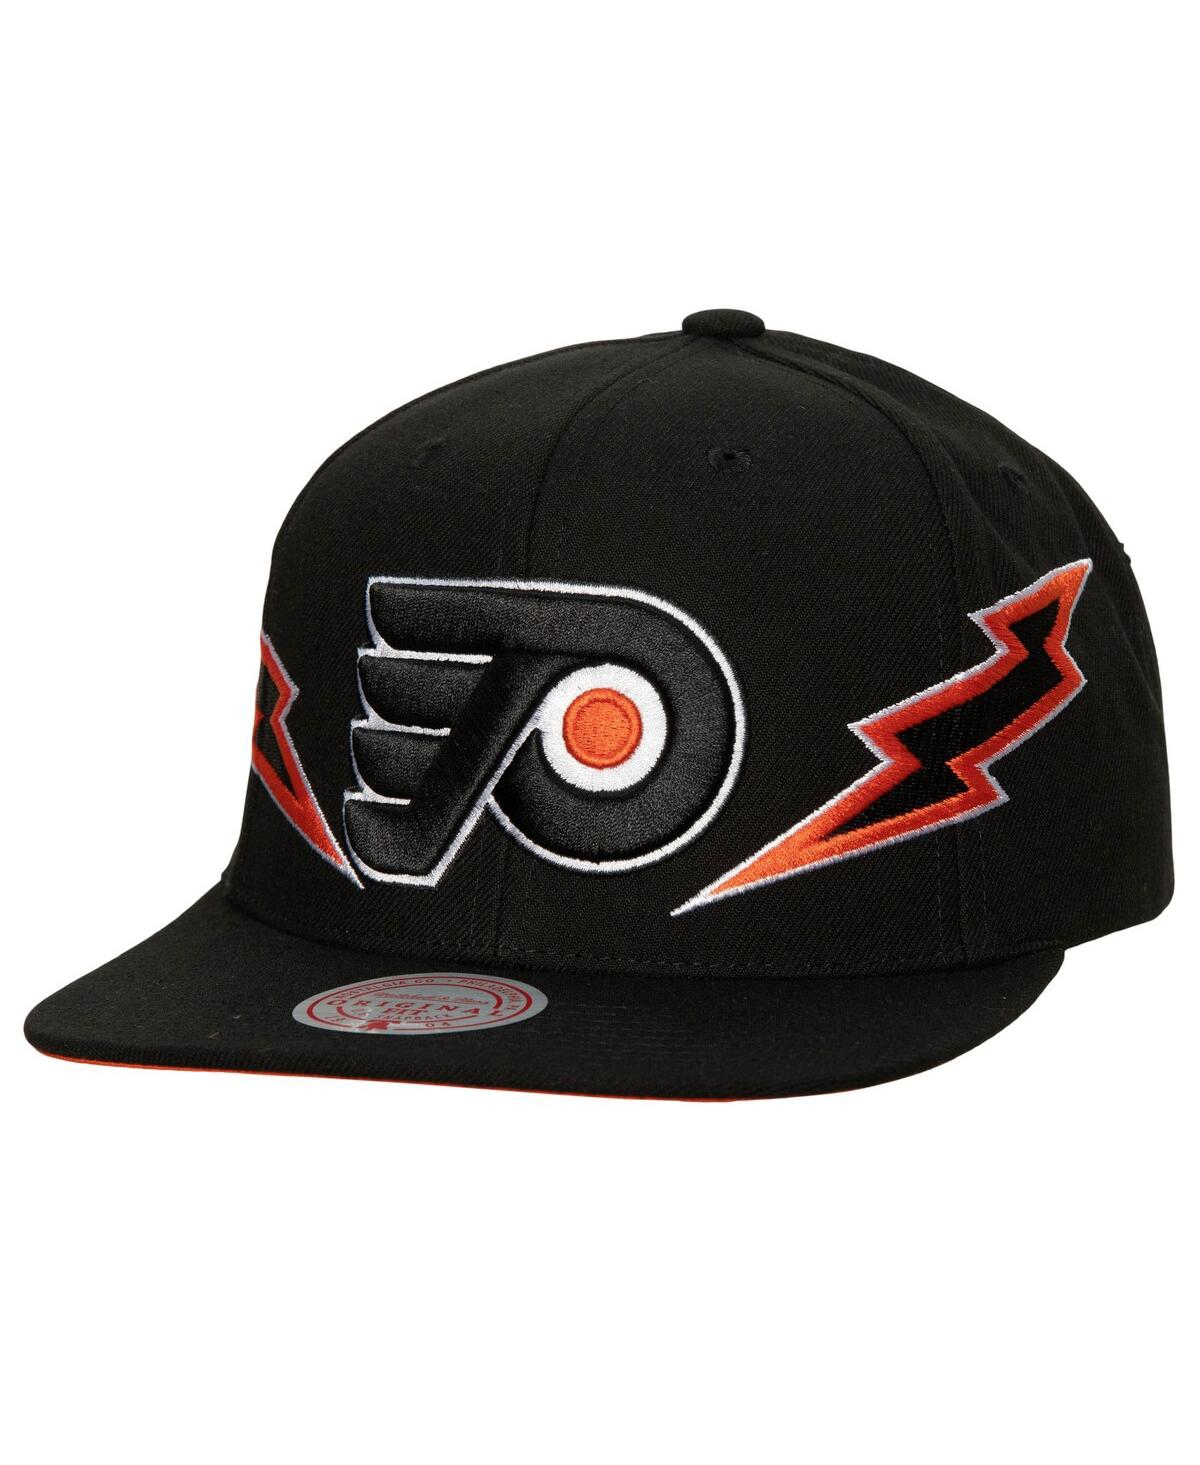 Shop Mitchell & Ness Men's  Black Philadelphia Flyers Double Trouble Lightning Snapback Hat